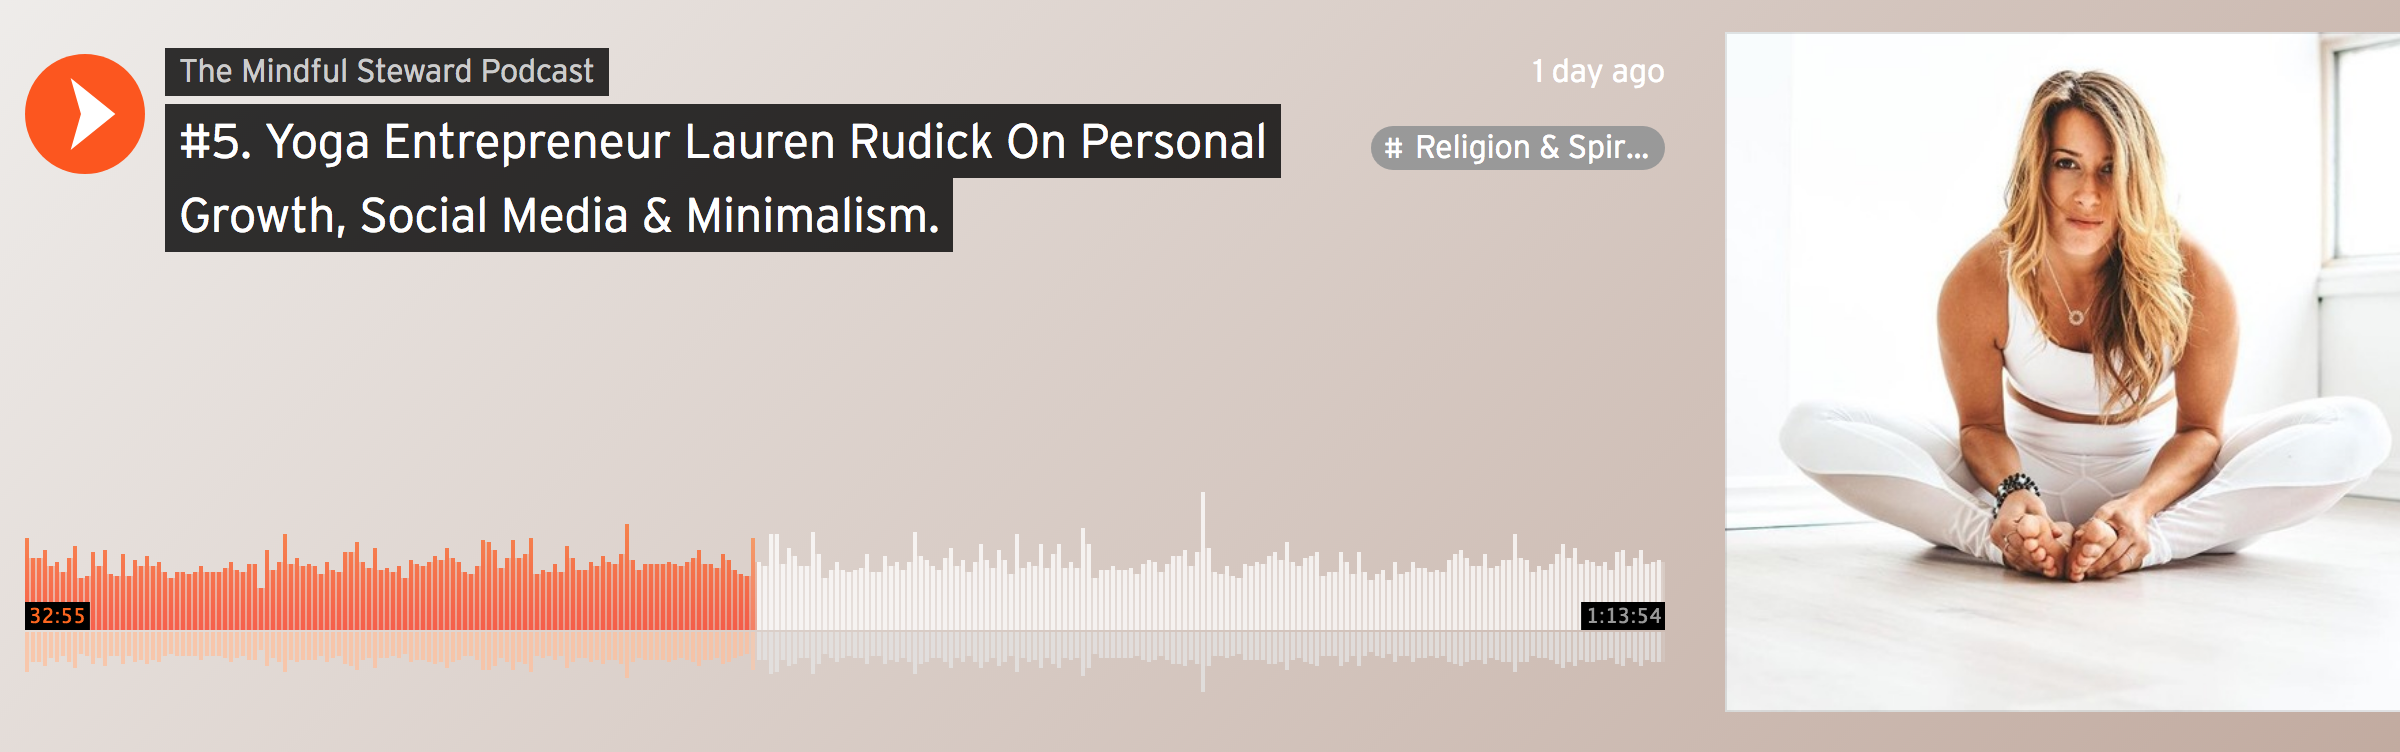 Lauren Rudick Mindful Steward podcast